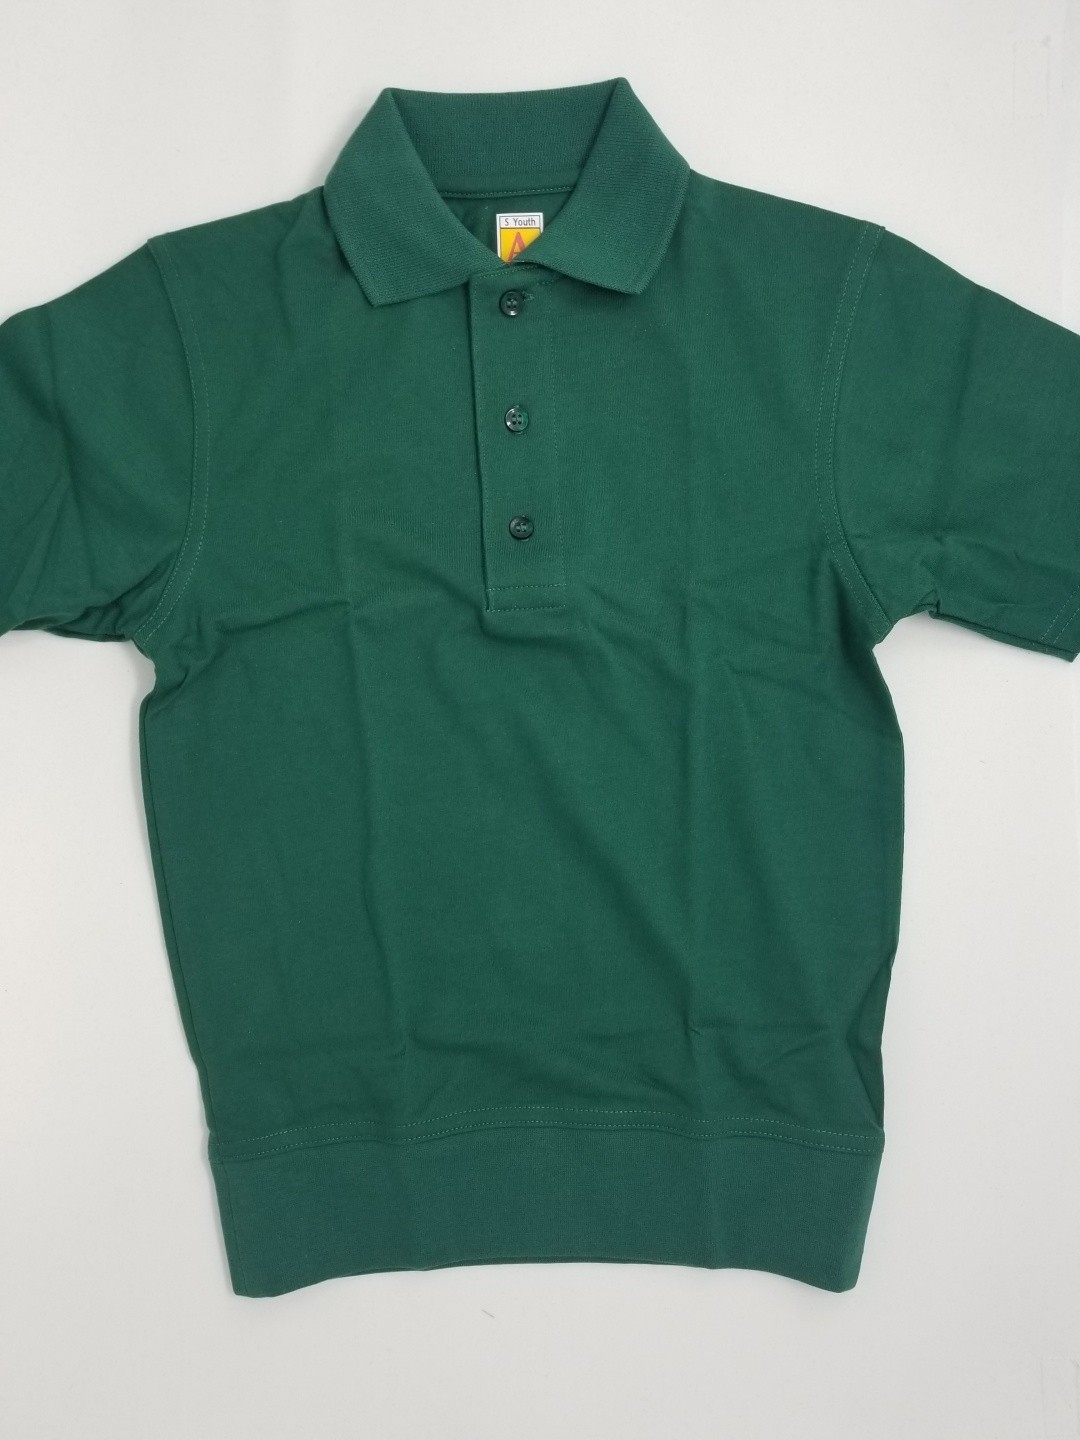 Banded Bottom "No Tuck" Knit Shirt- Smooth/Jersey- Short Sleeve-Hunter Green